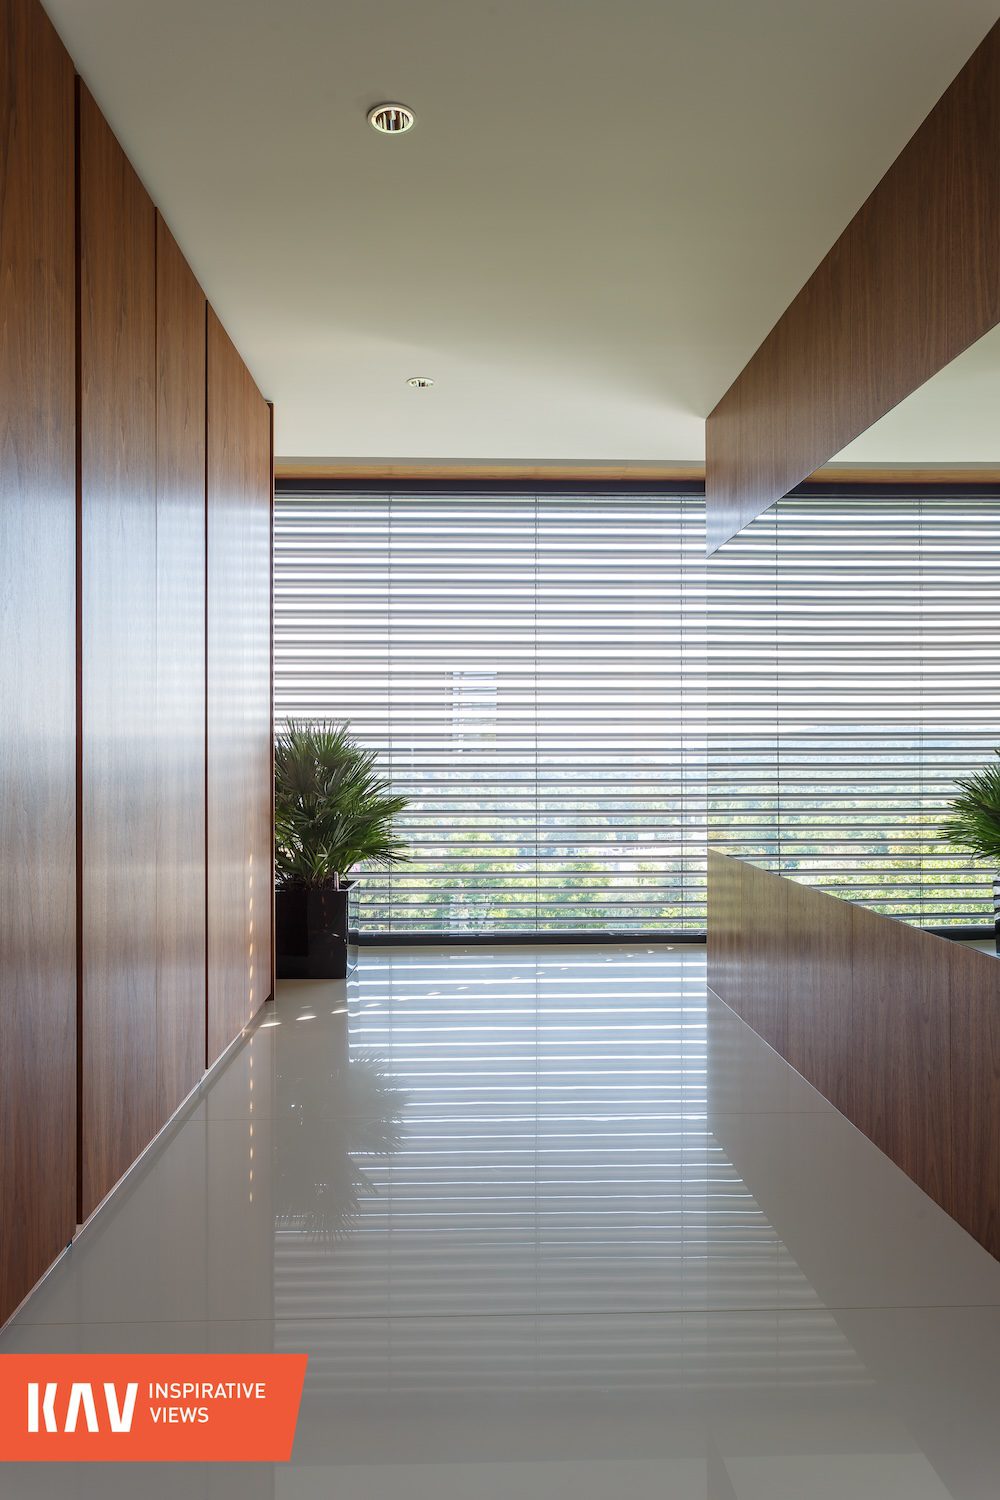 Schuco-aluminium-keret-nelkuli-toloajto-frameless-slide-door-porsche-design-PD77-minimal-house-interior-gardrobe-belter